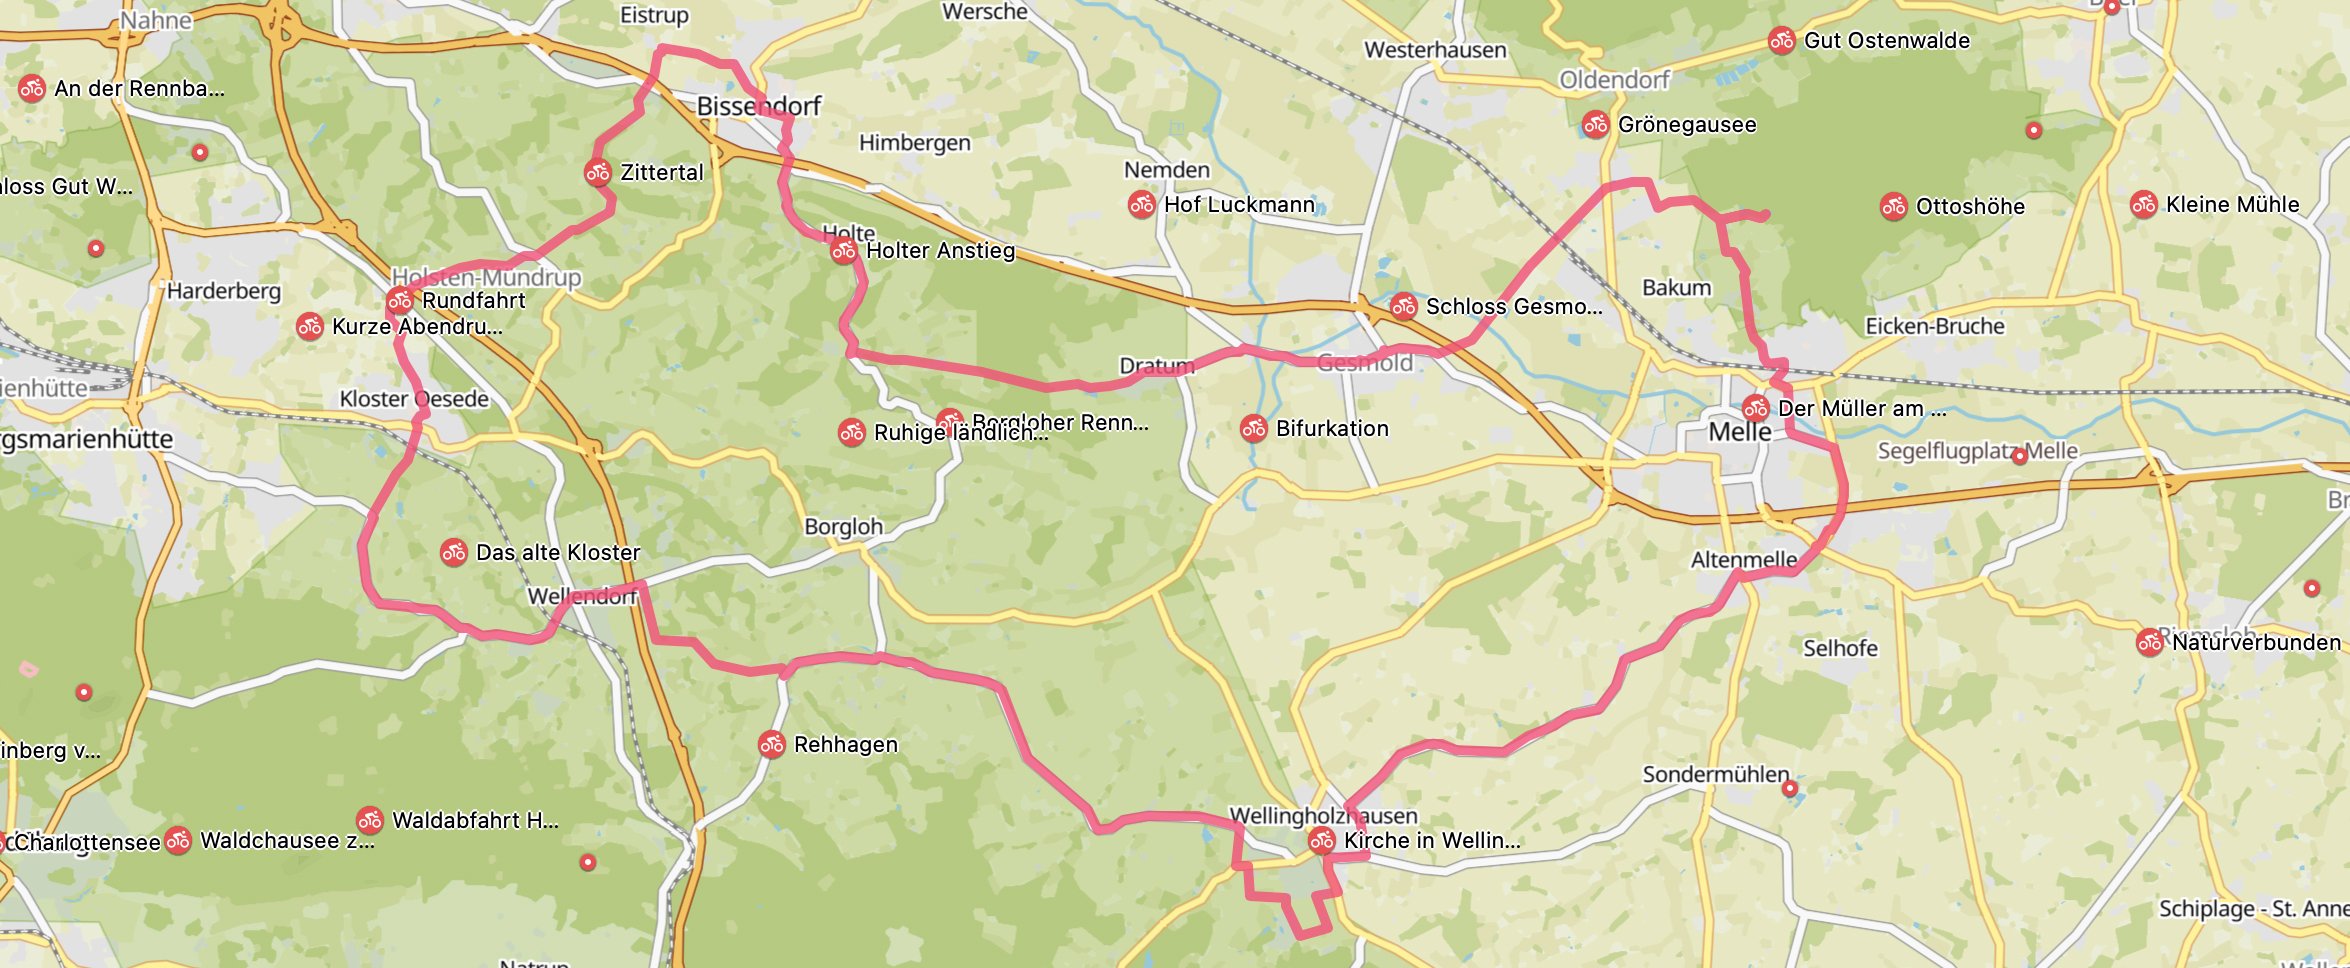 Karte_Panorama_Route_web